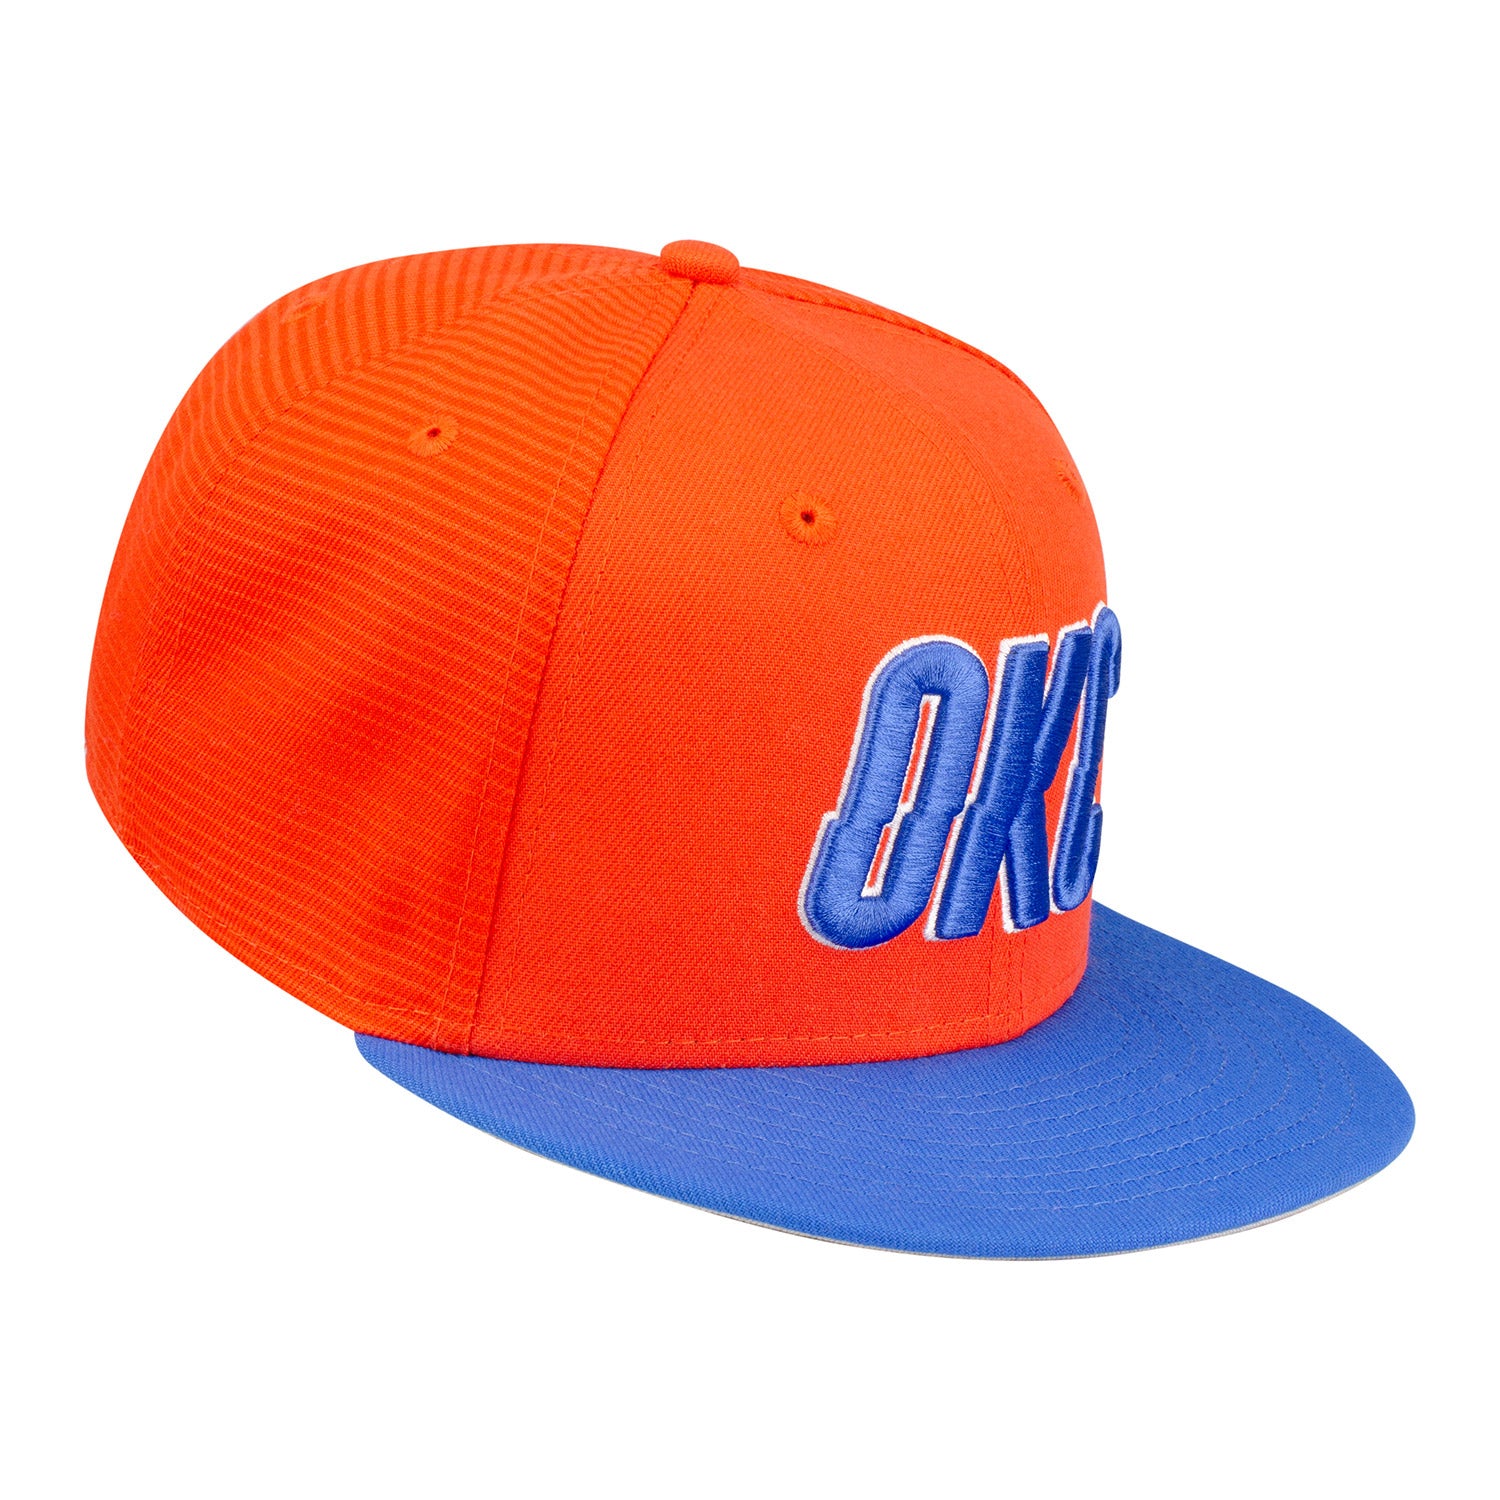 New Era Men's Oklahoma City Thunder Blue 9FIFTY Adjustable Hat